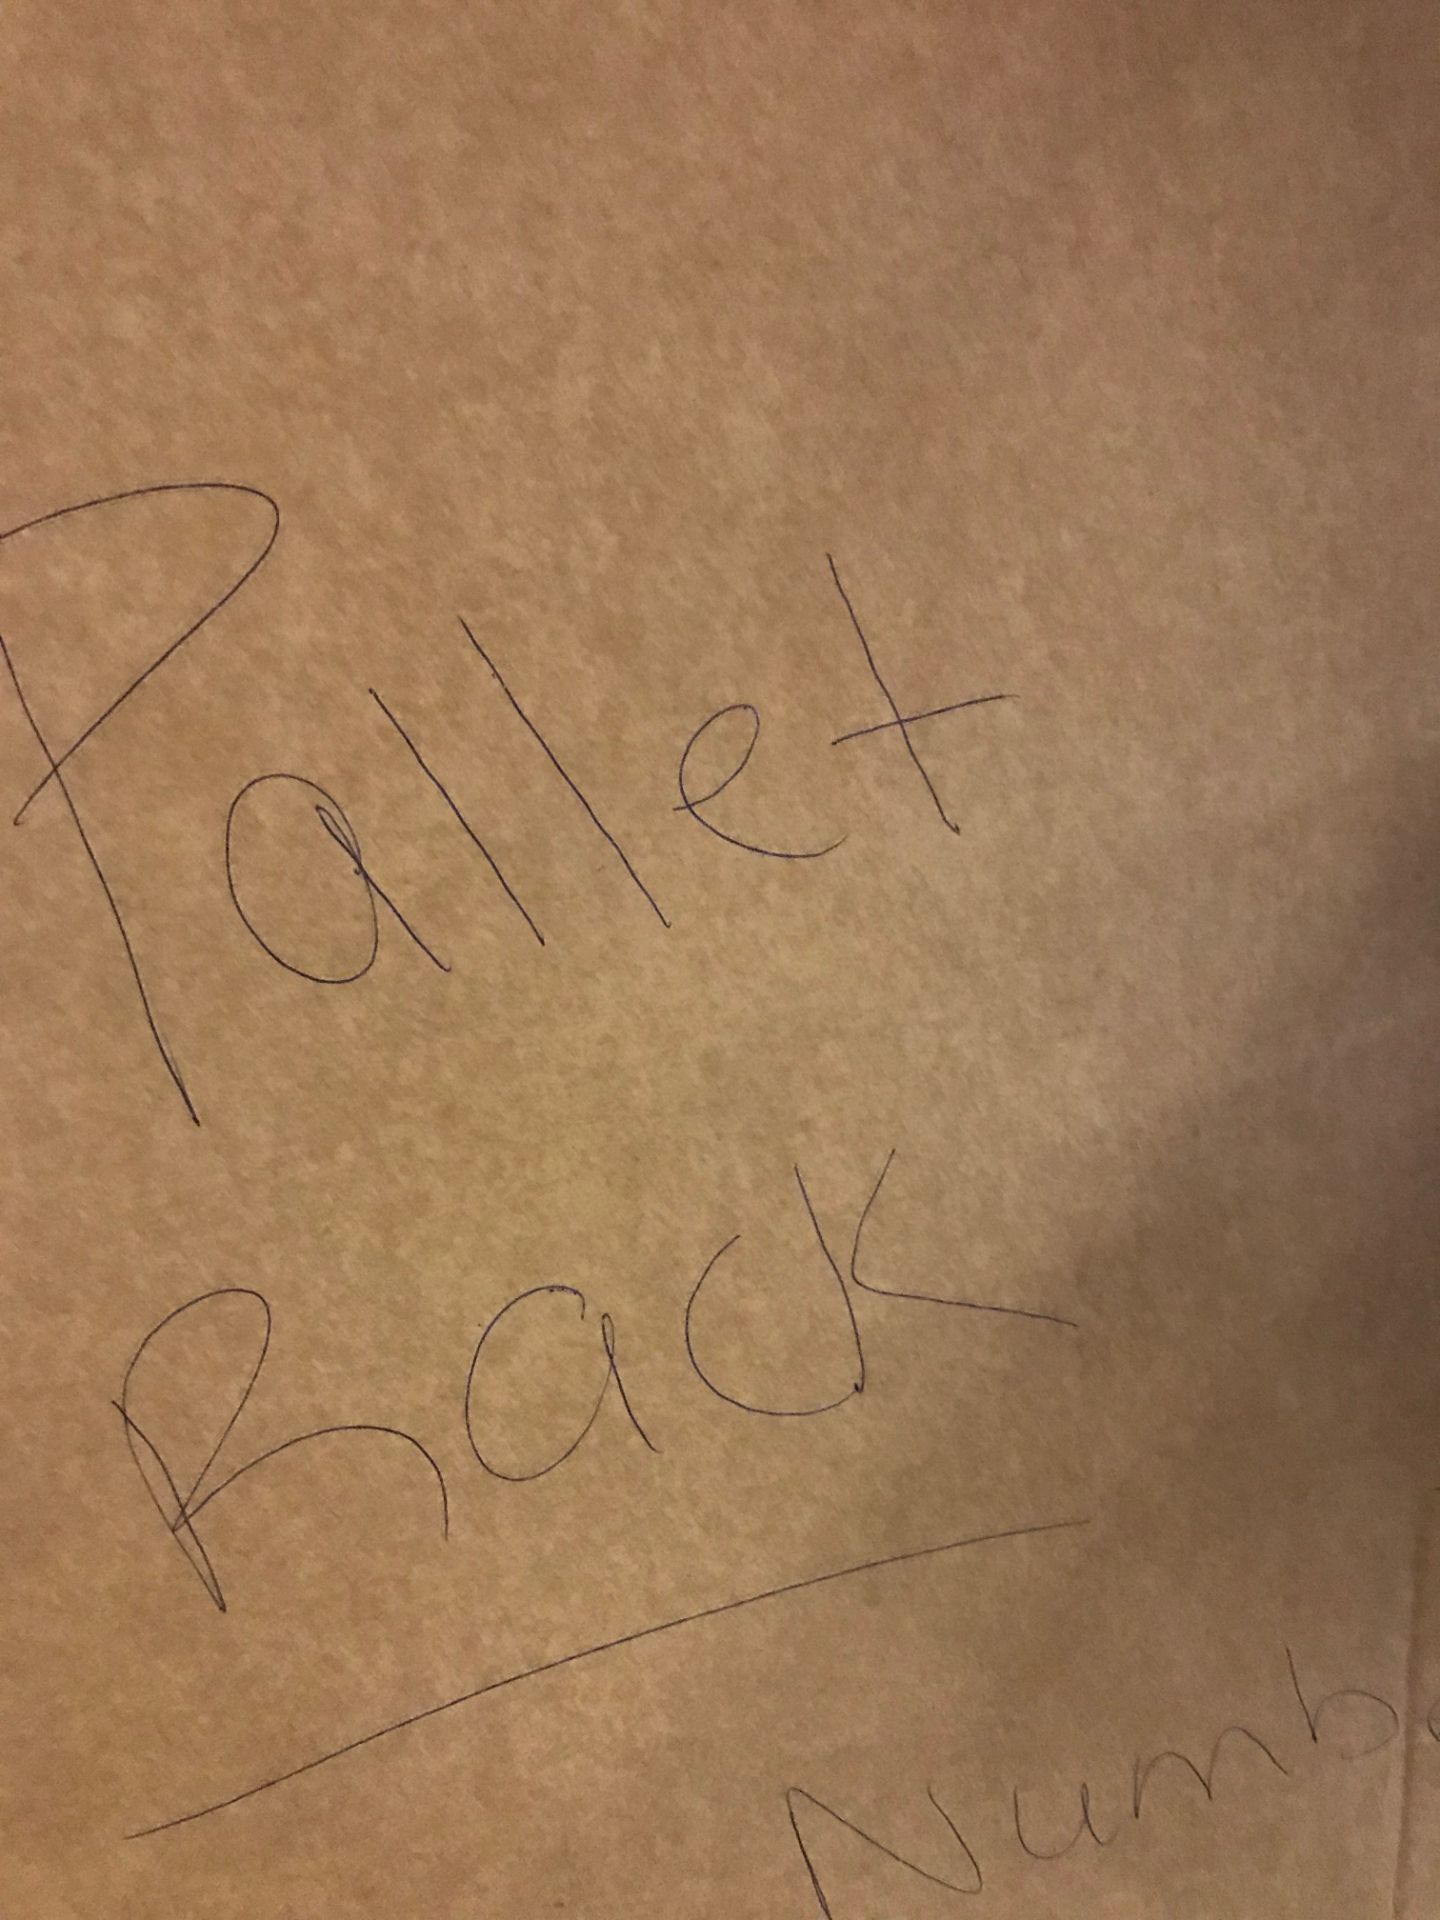 Pallet rack - Image 2 of 3